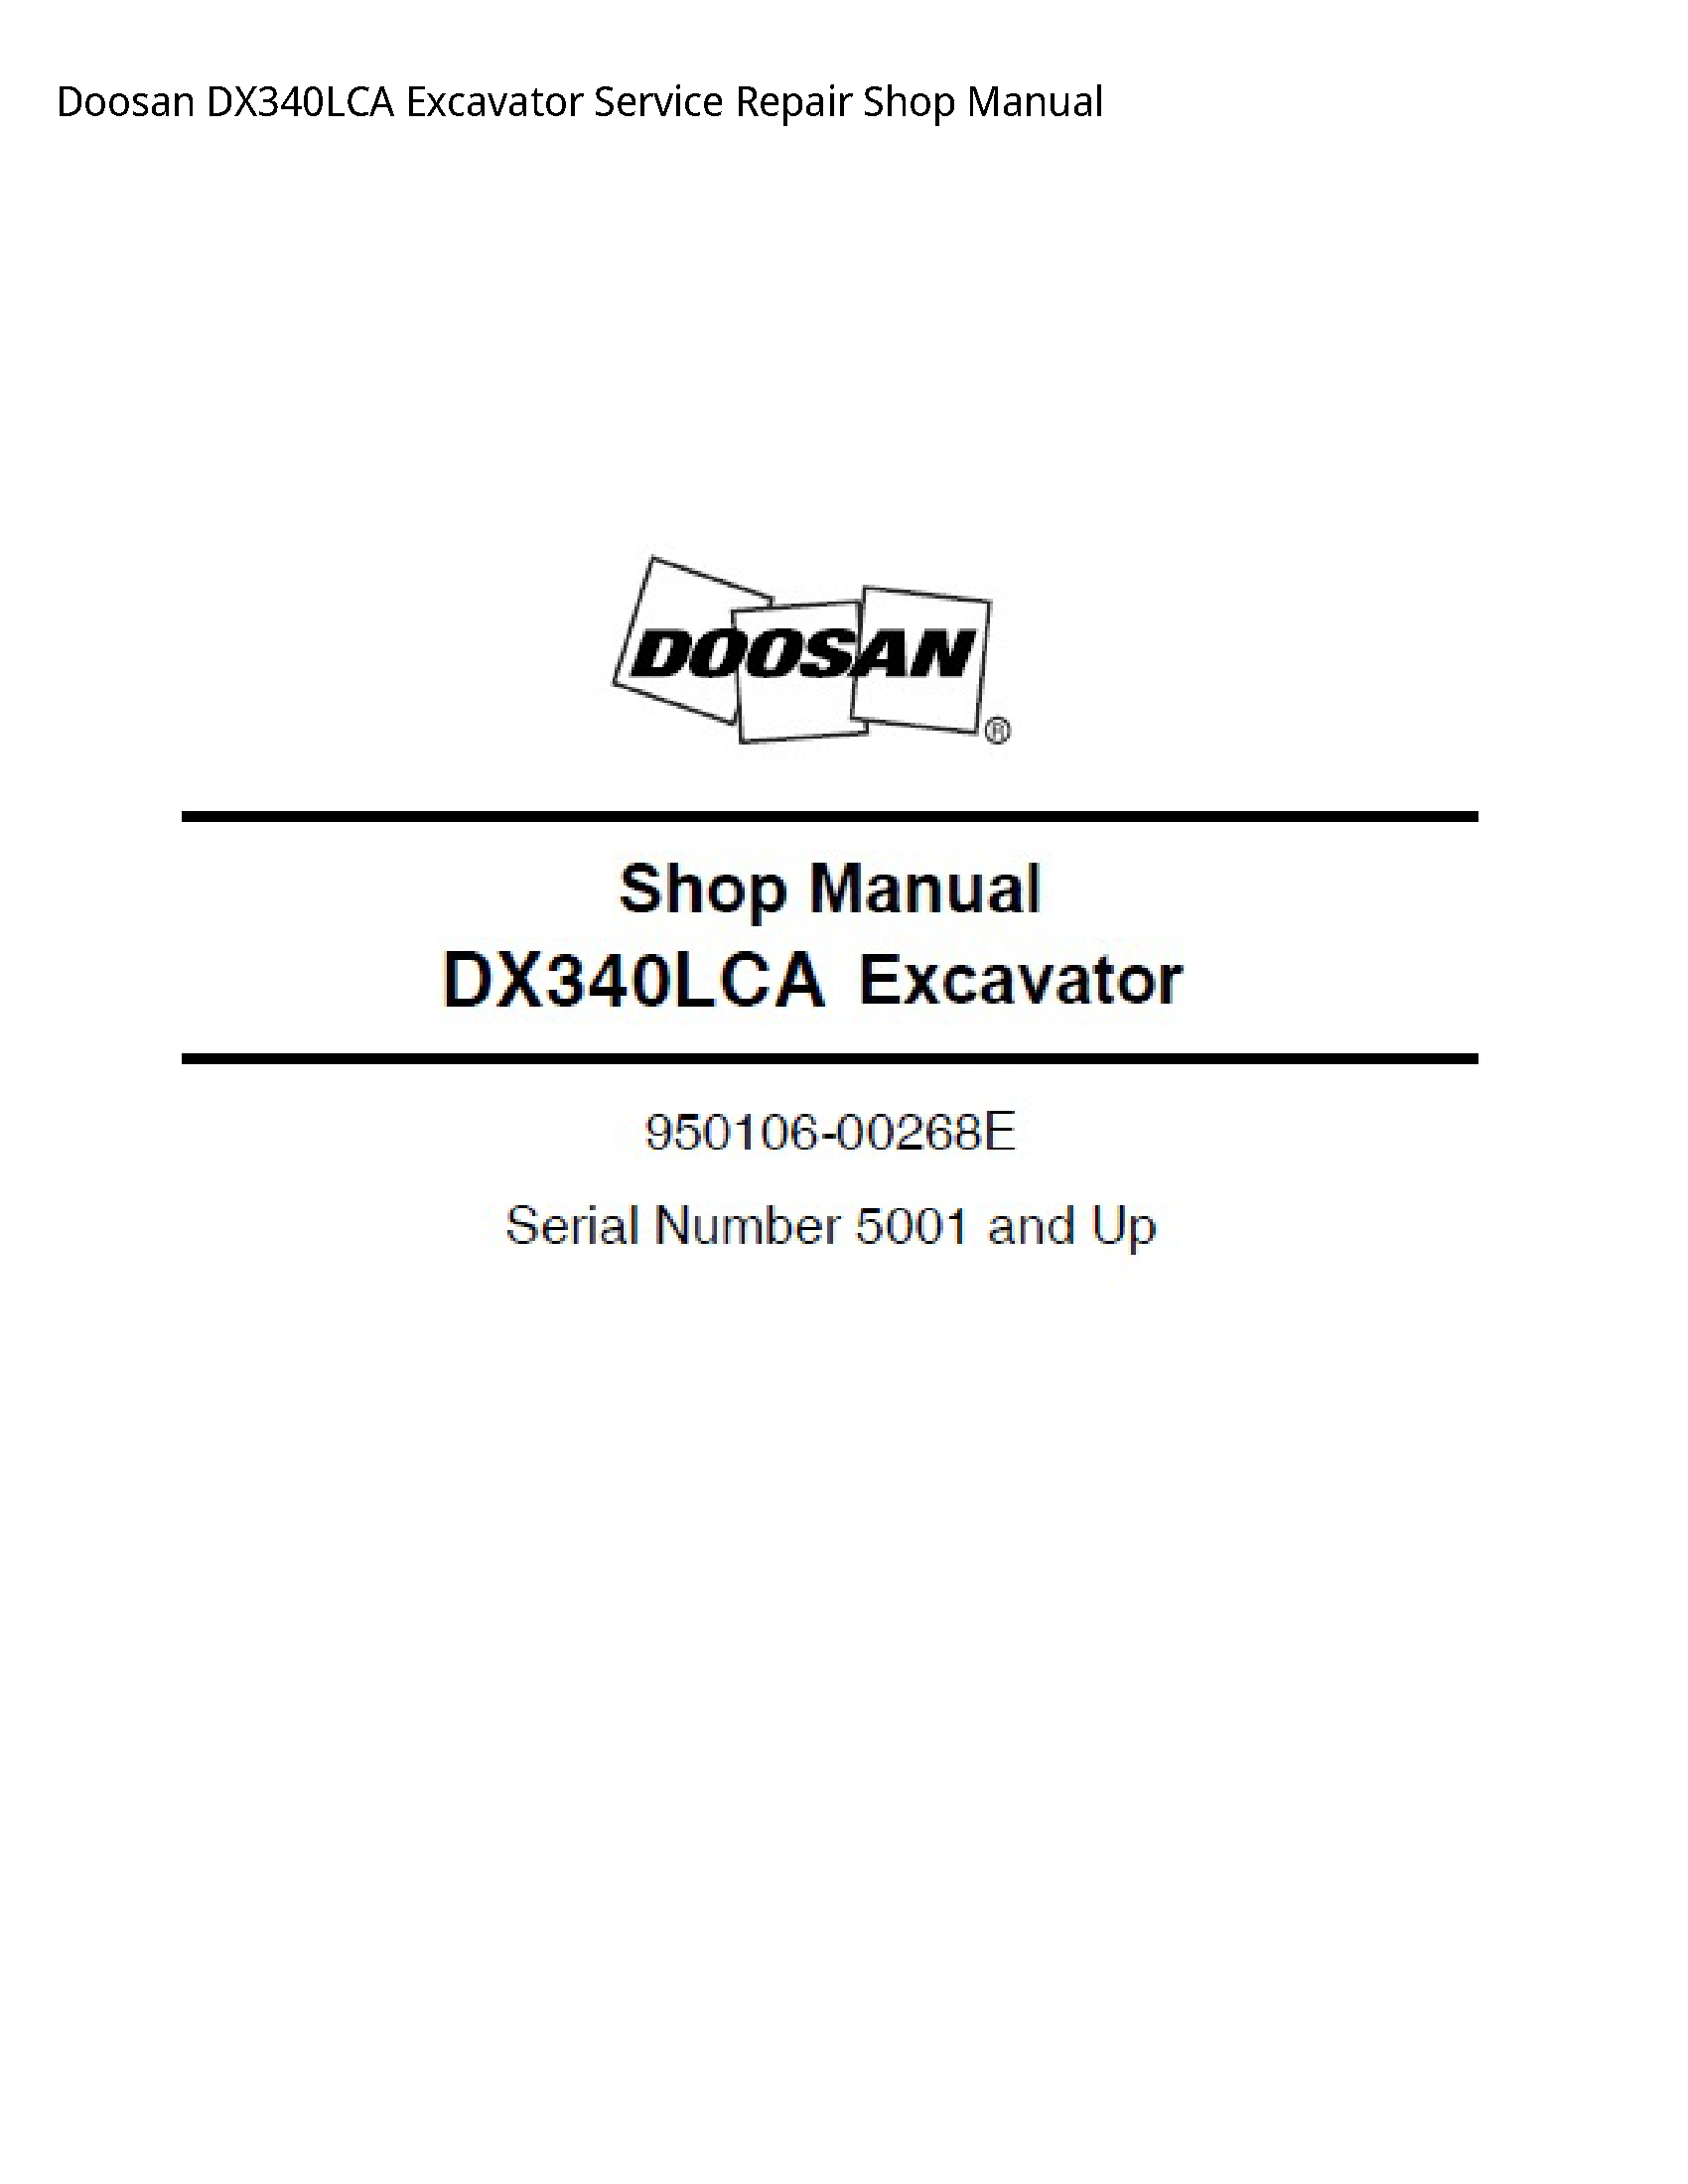 Doosan DX340LCA Excavator manual